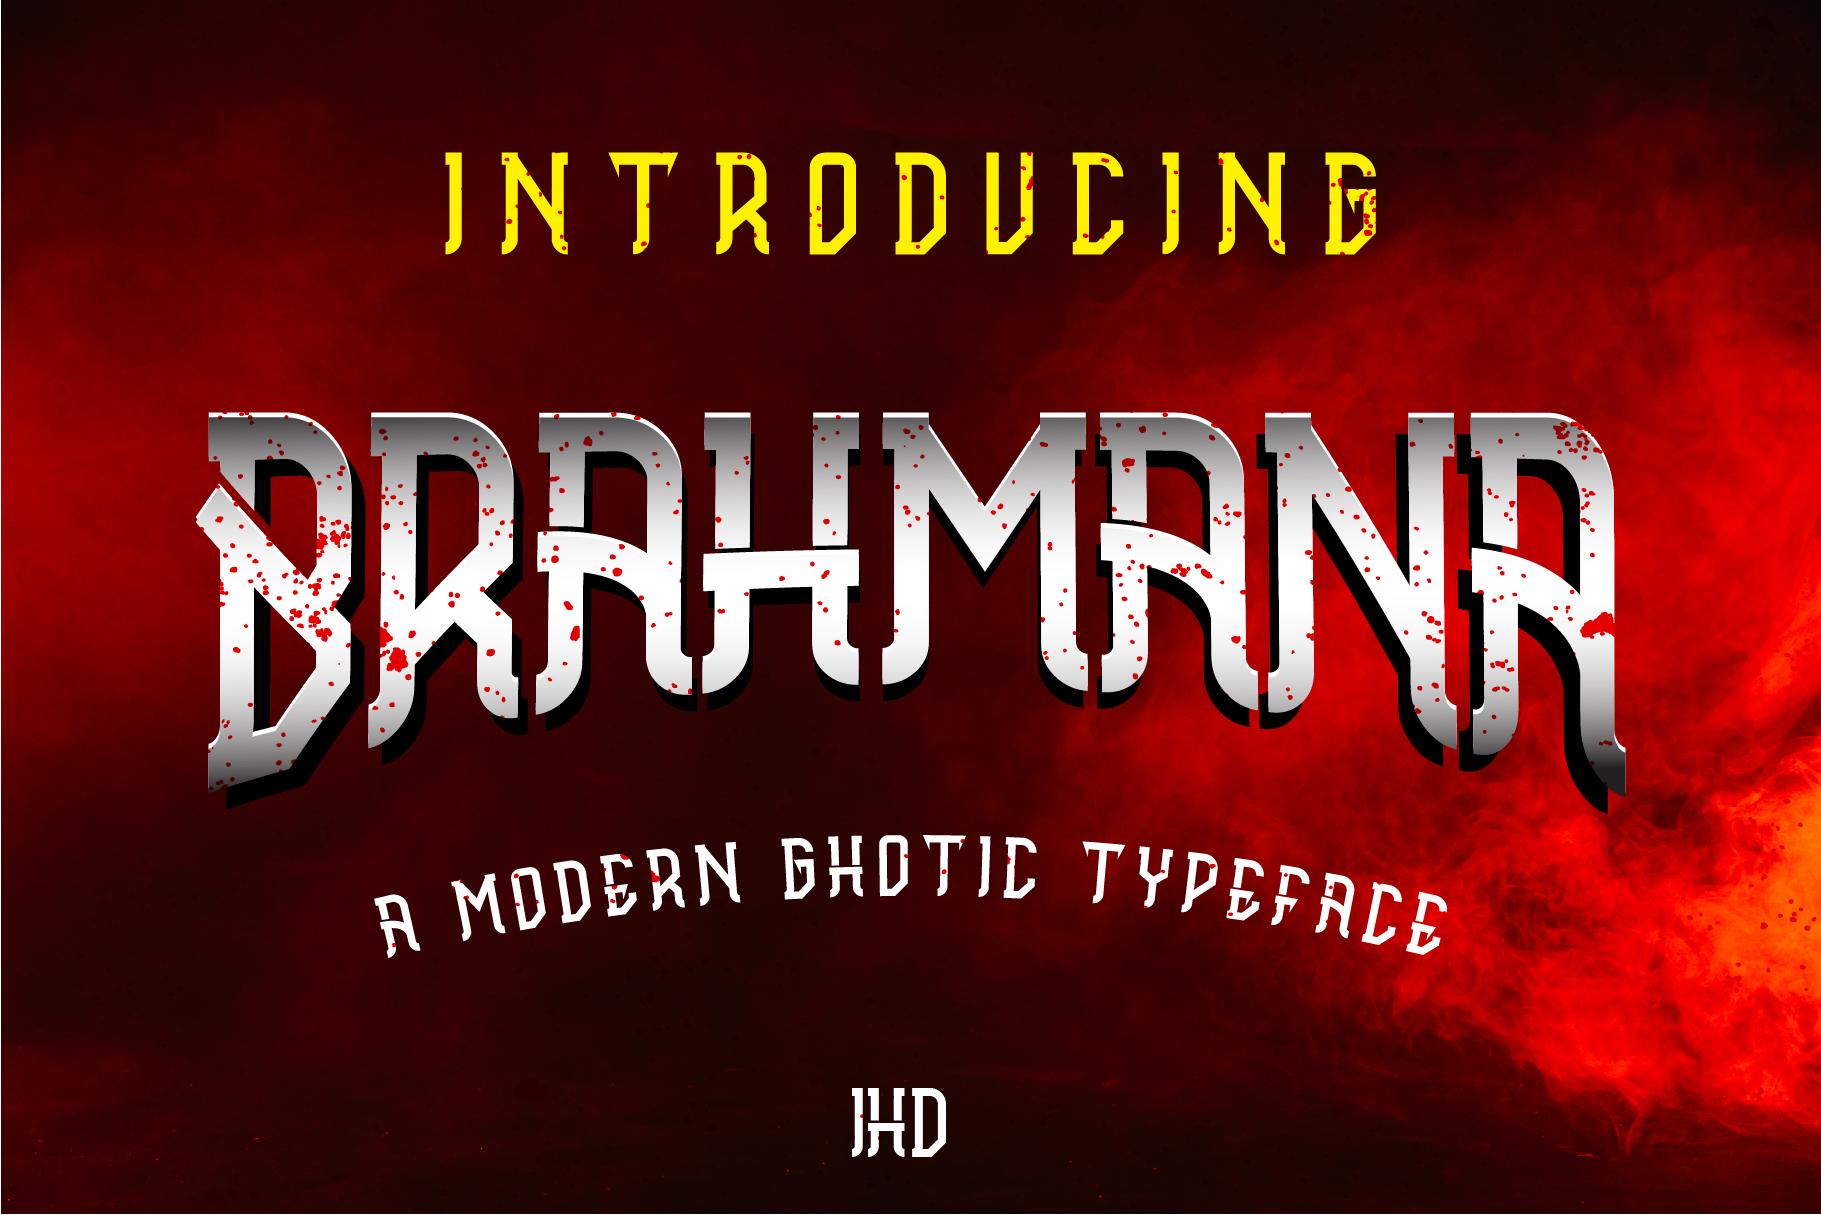 Brahmana Font